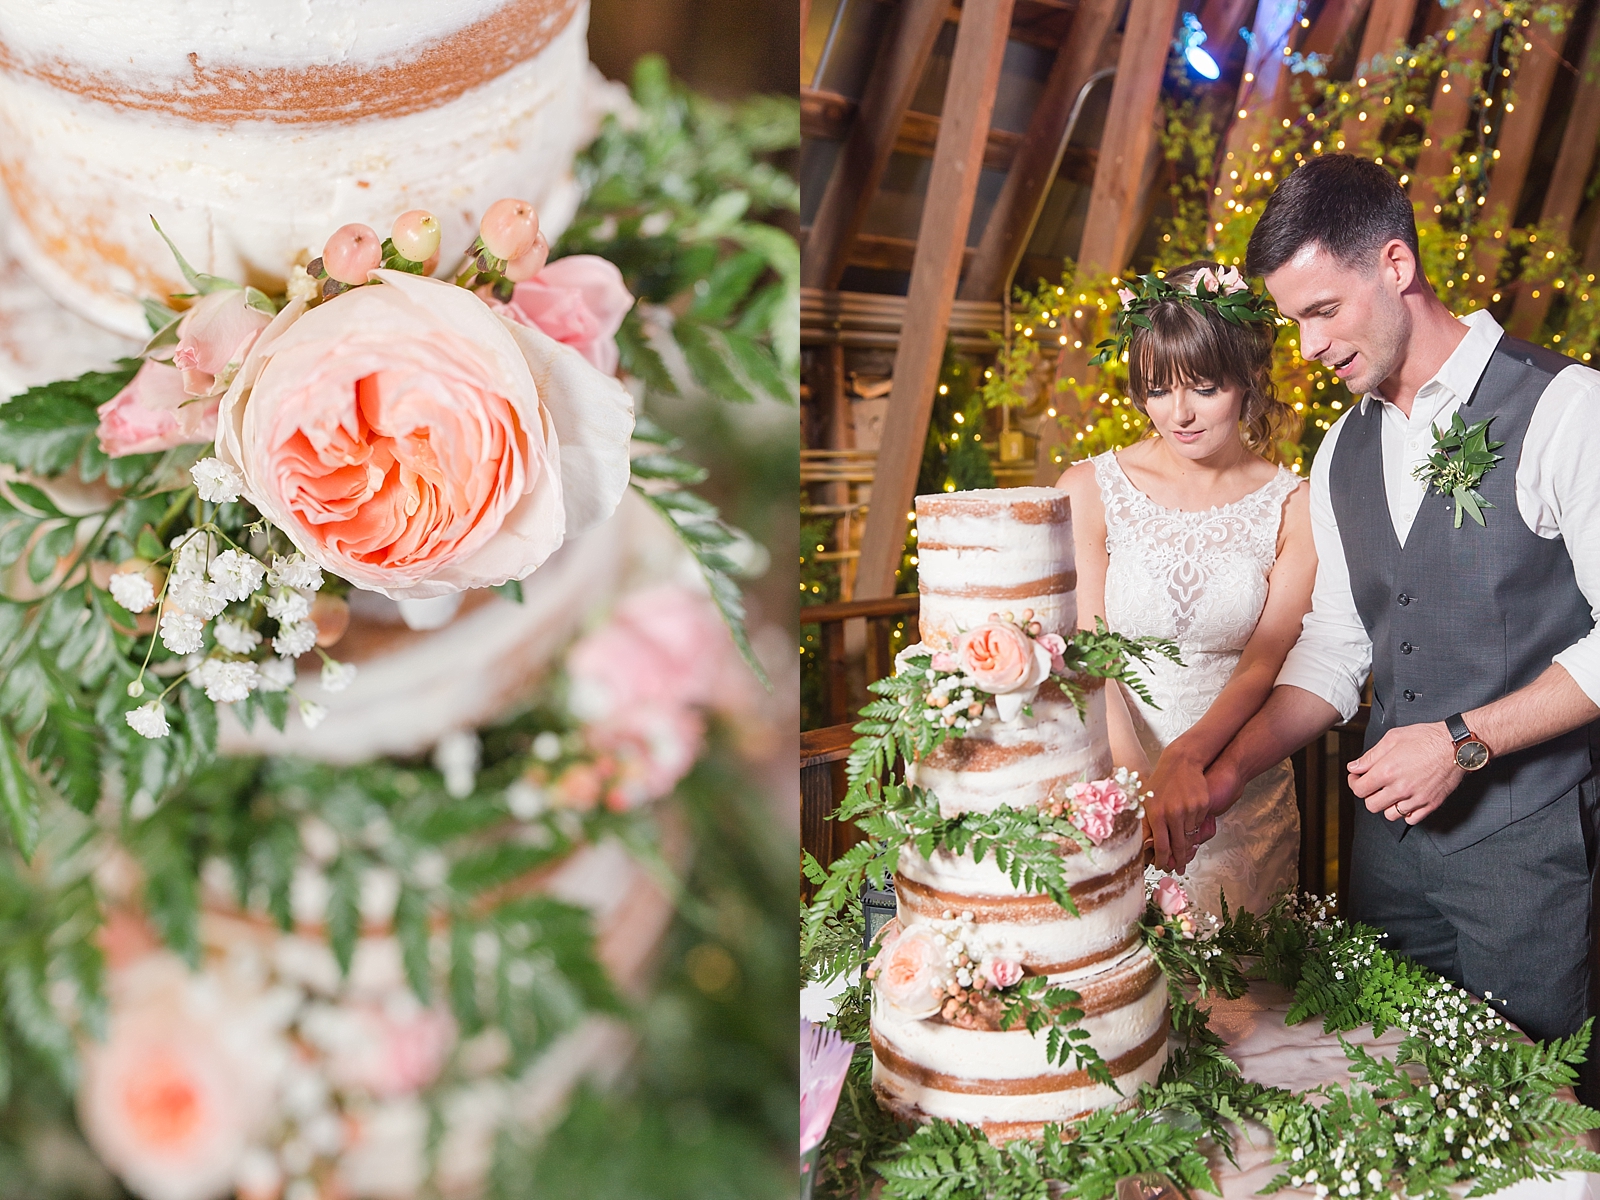 Black Fox Farms Wedding Reception Cake and Bride and Groom Cutting Cake Photos